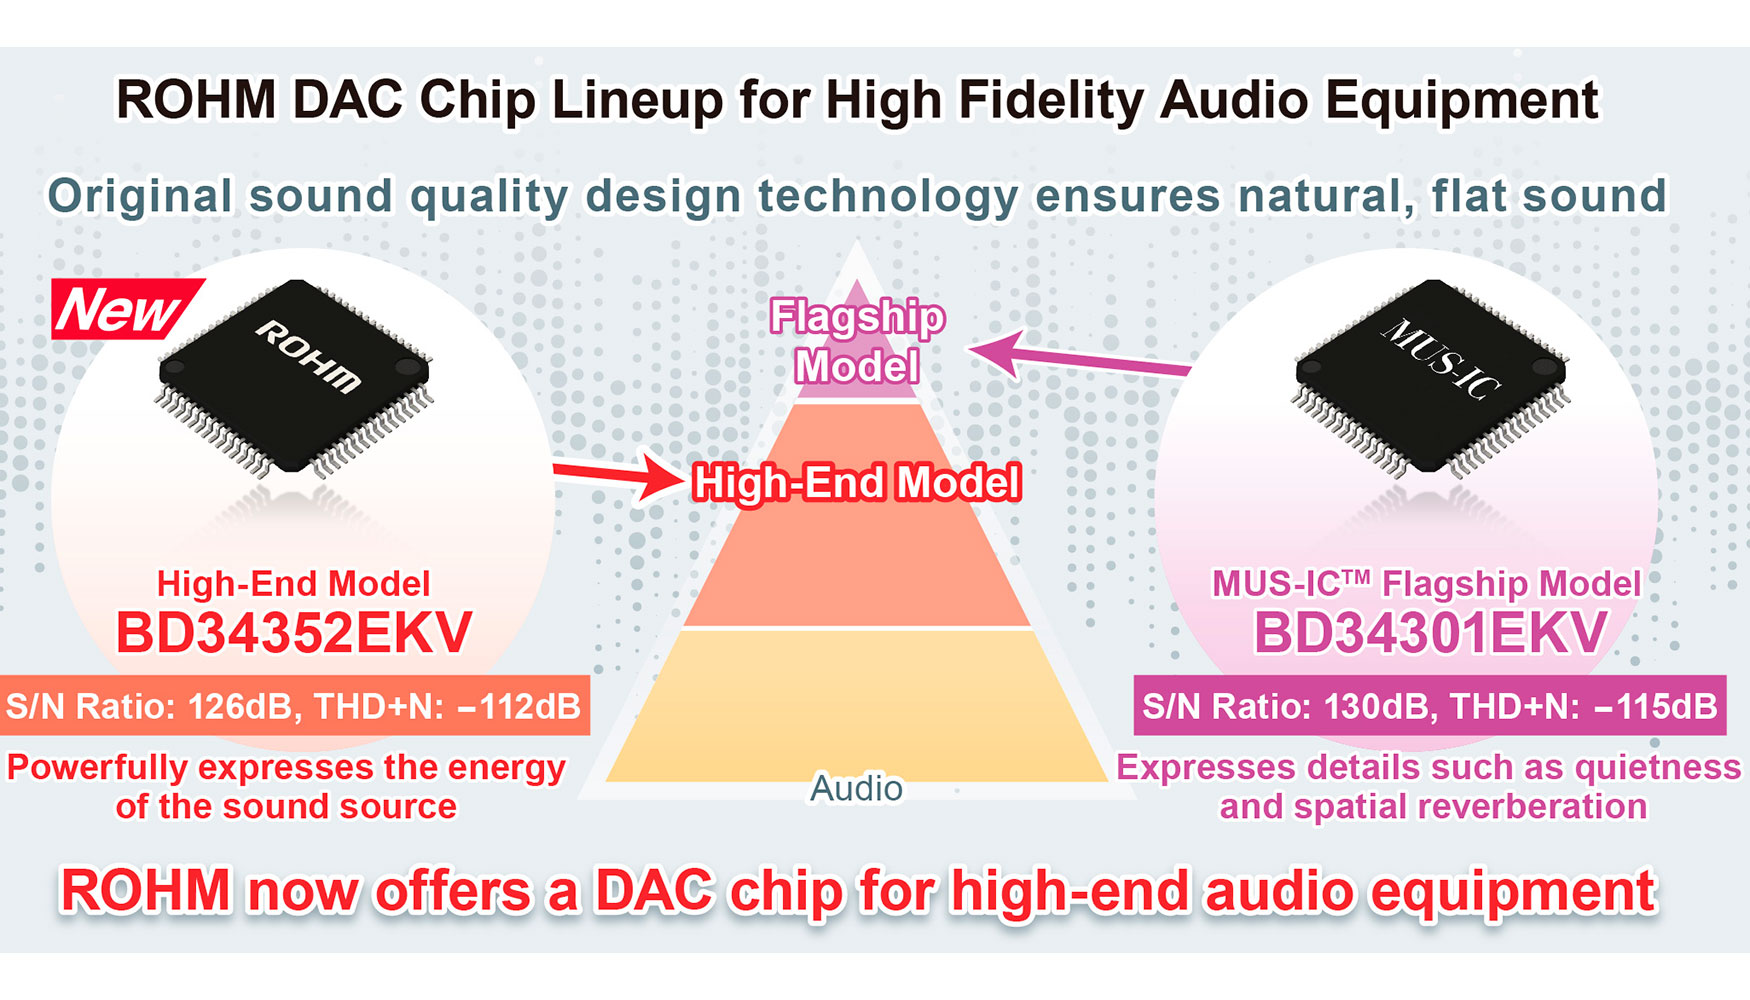 Lnea de chips DAC de Rohm para equipos de audio de alta fidelidad